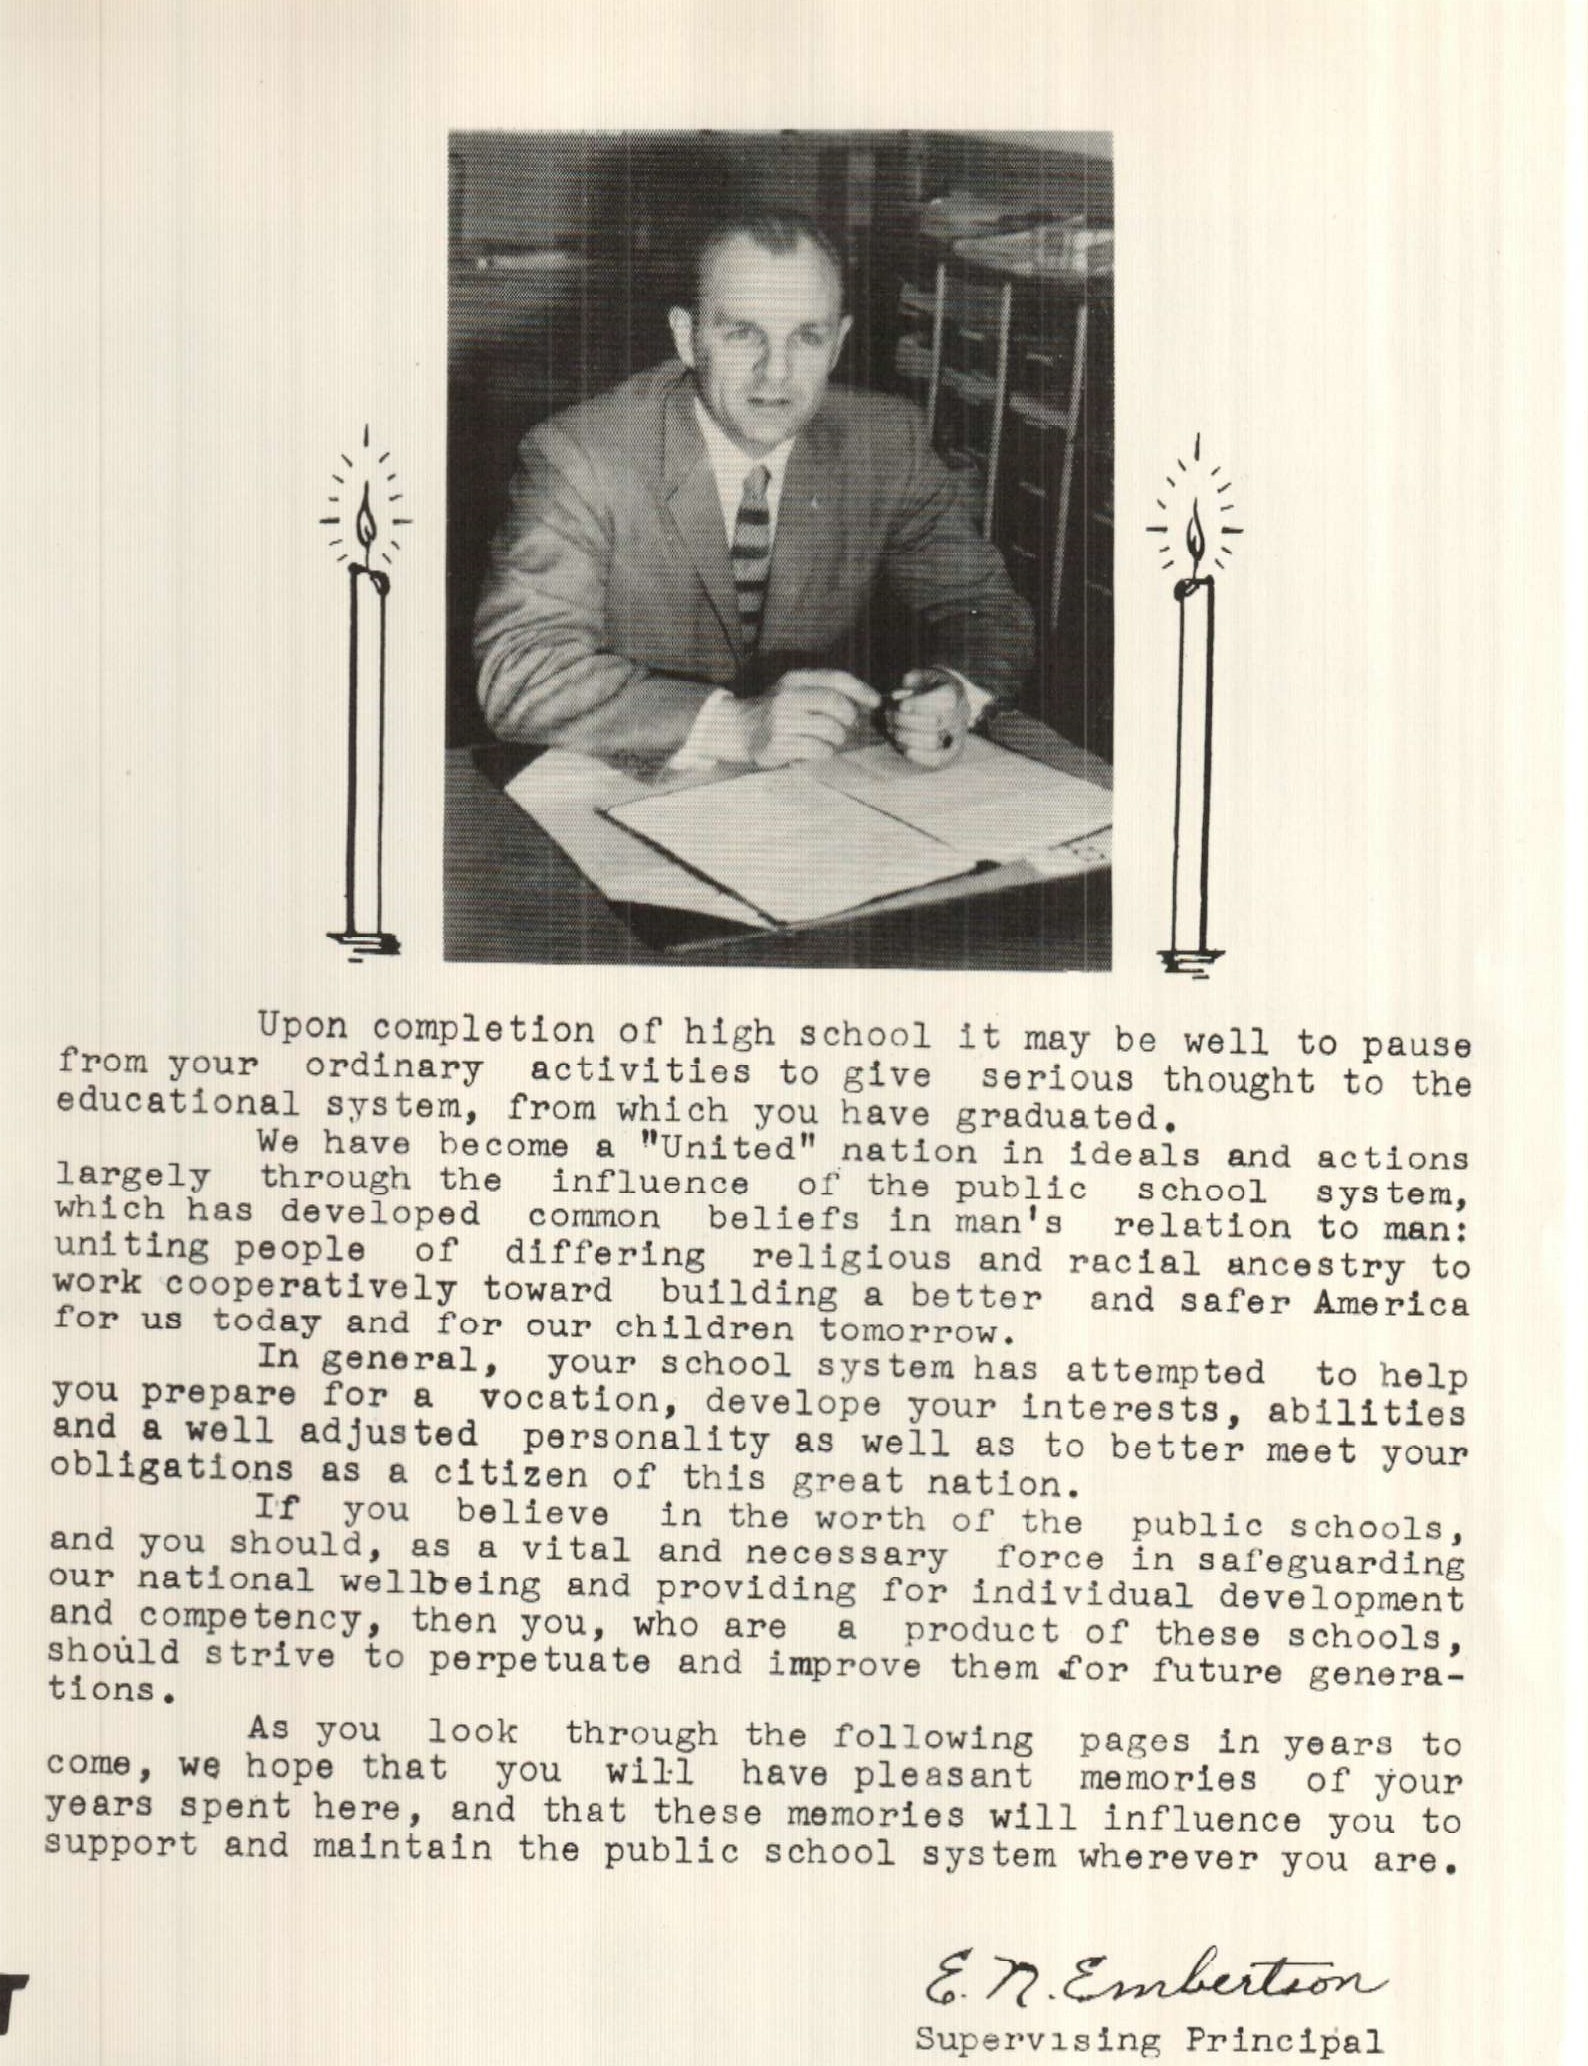 Principal E.N. Embertson photo and paragraph